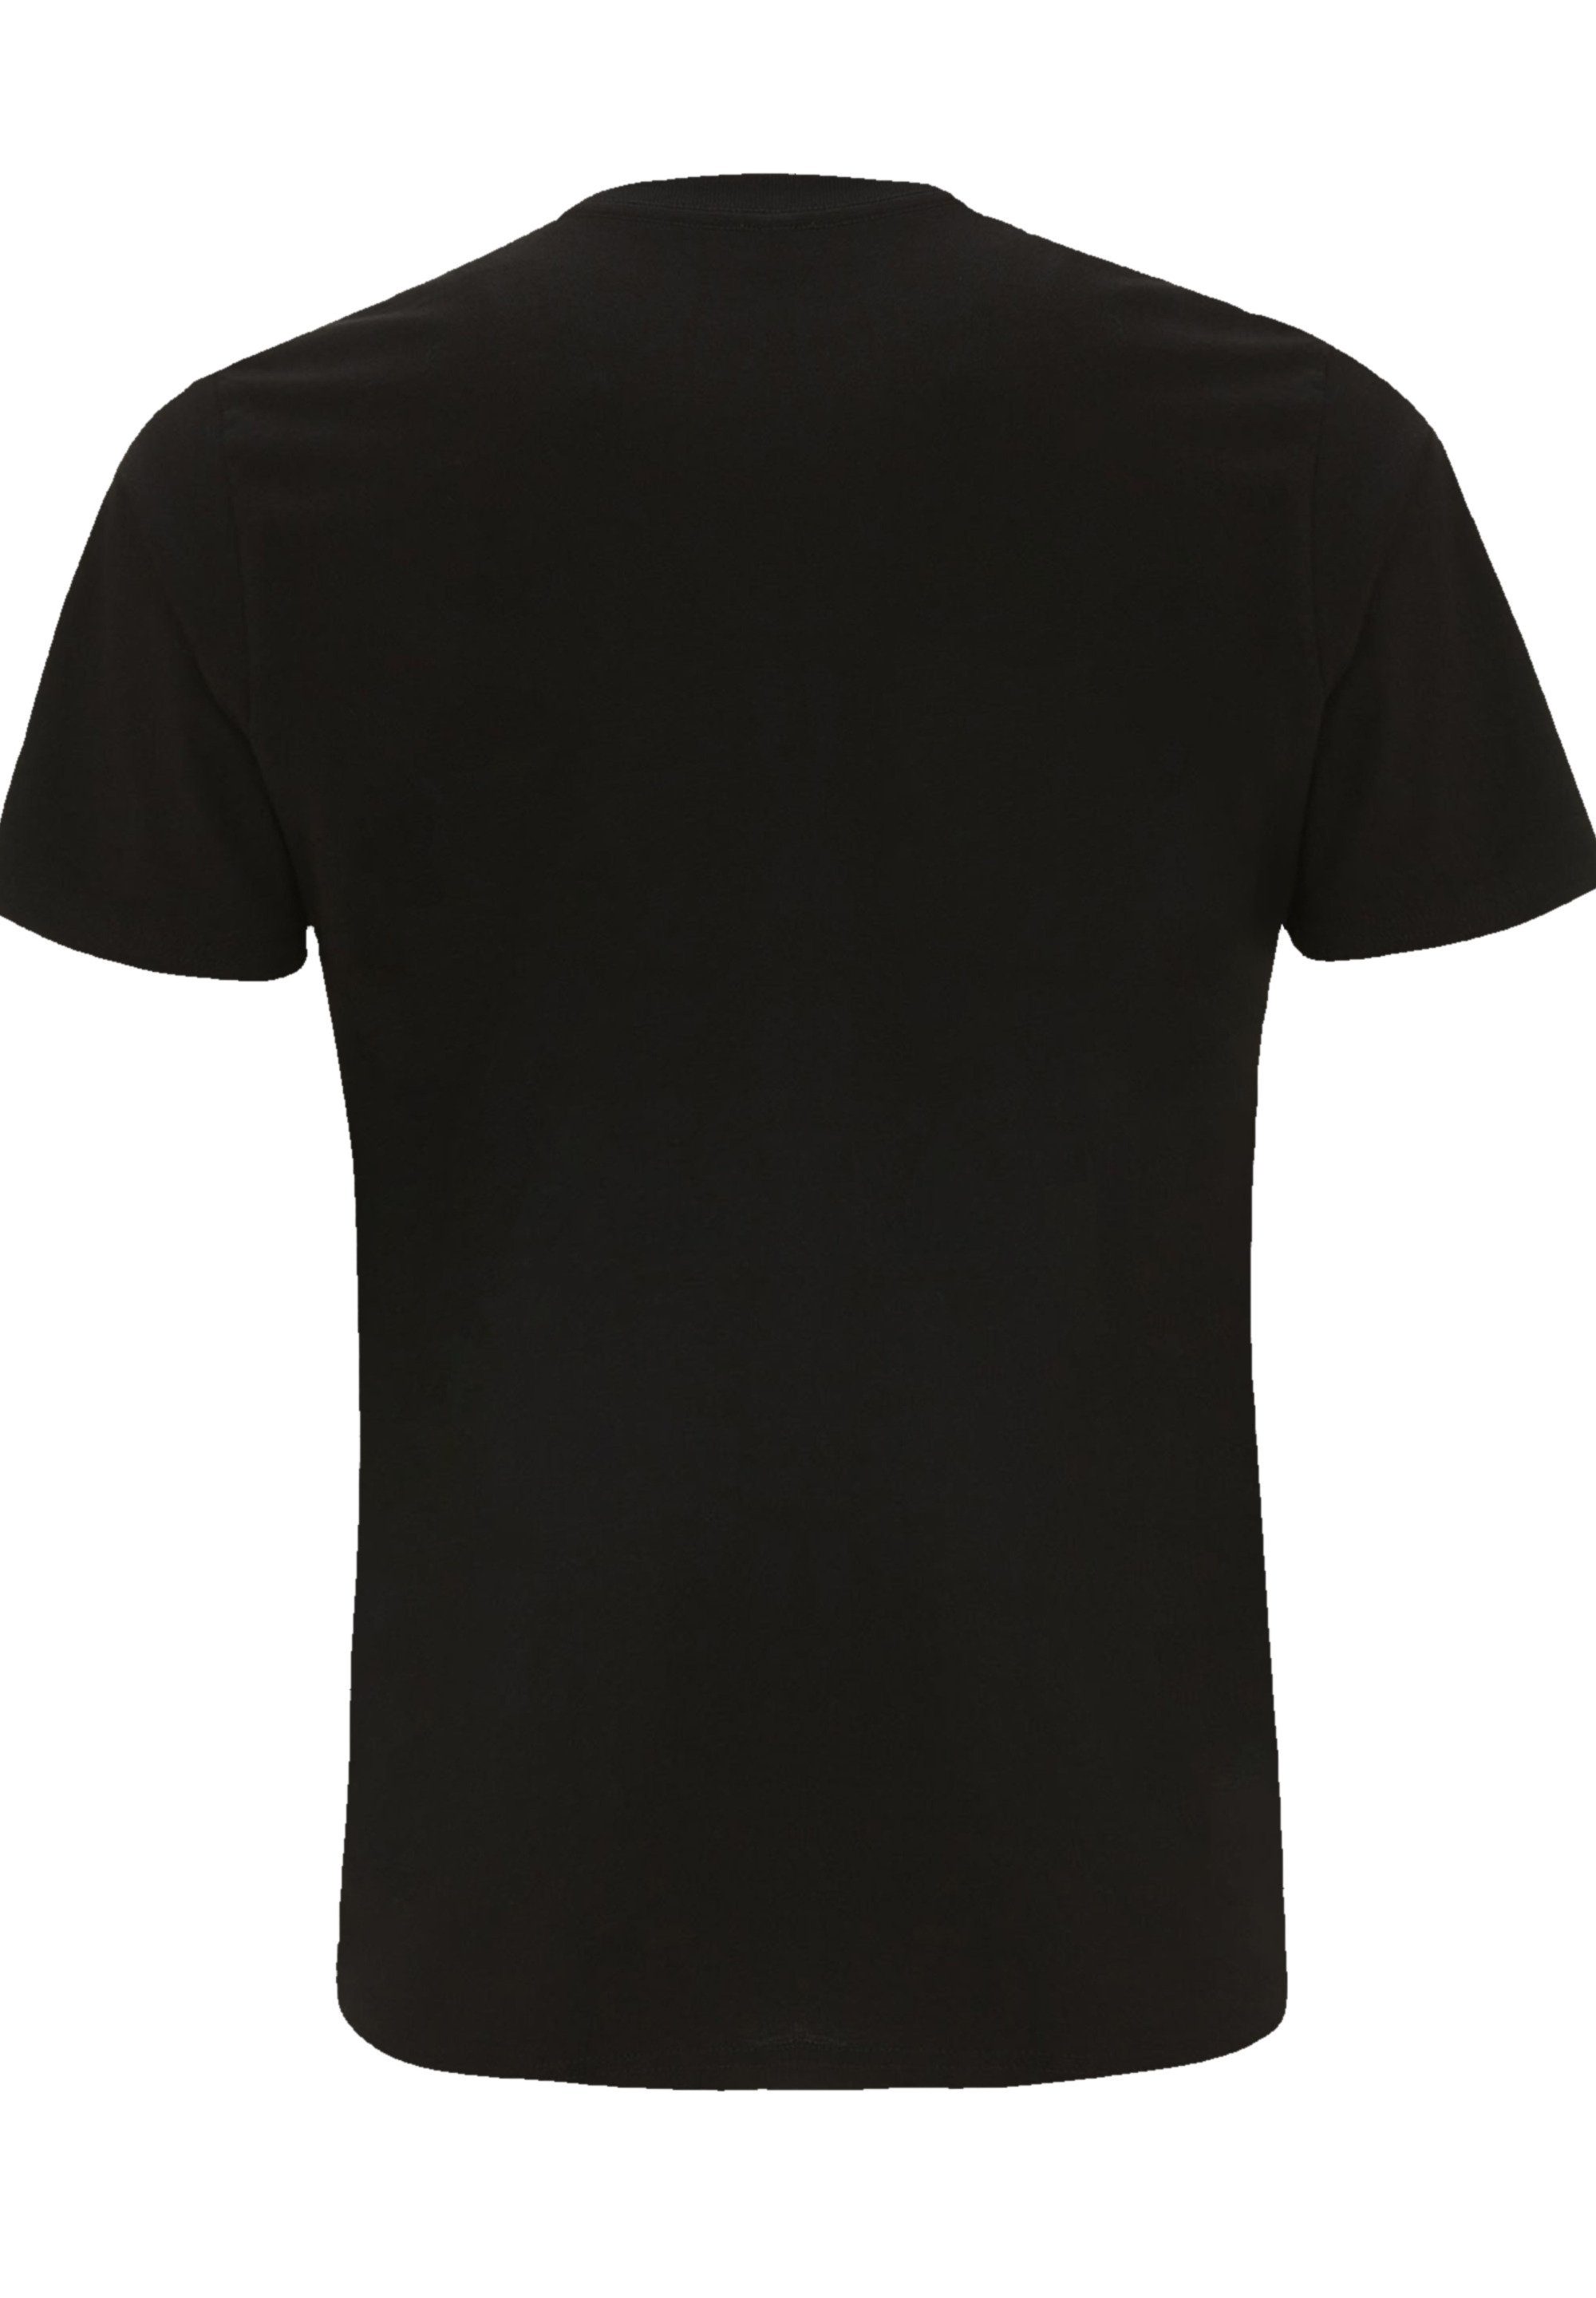 F4NT4STIC T-Shirt Queen Classic Crest Print, fairen Unter Arbeitsbedingungen hergestellt